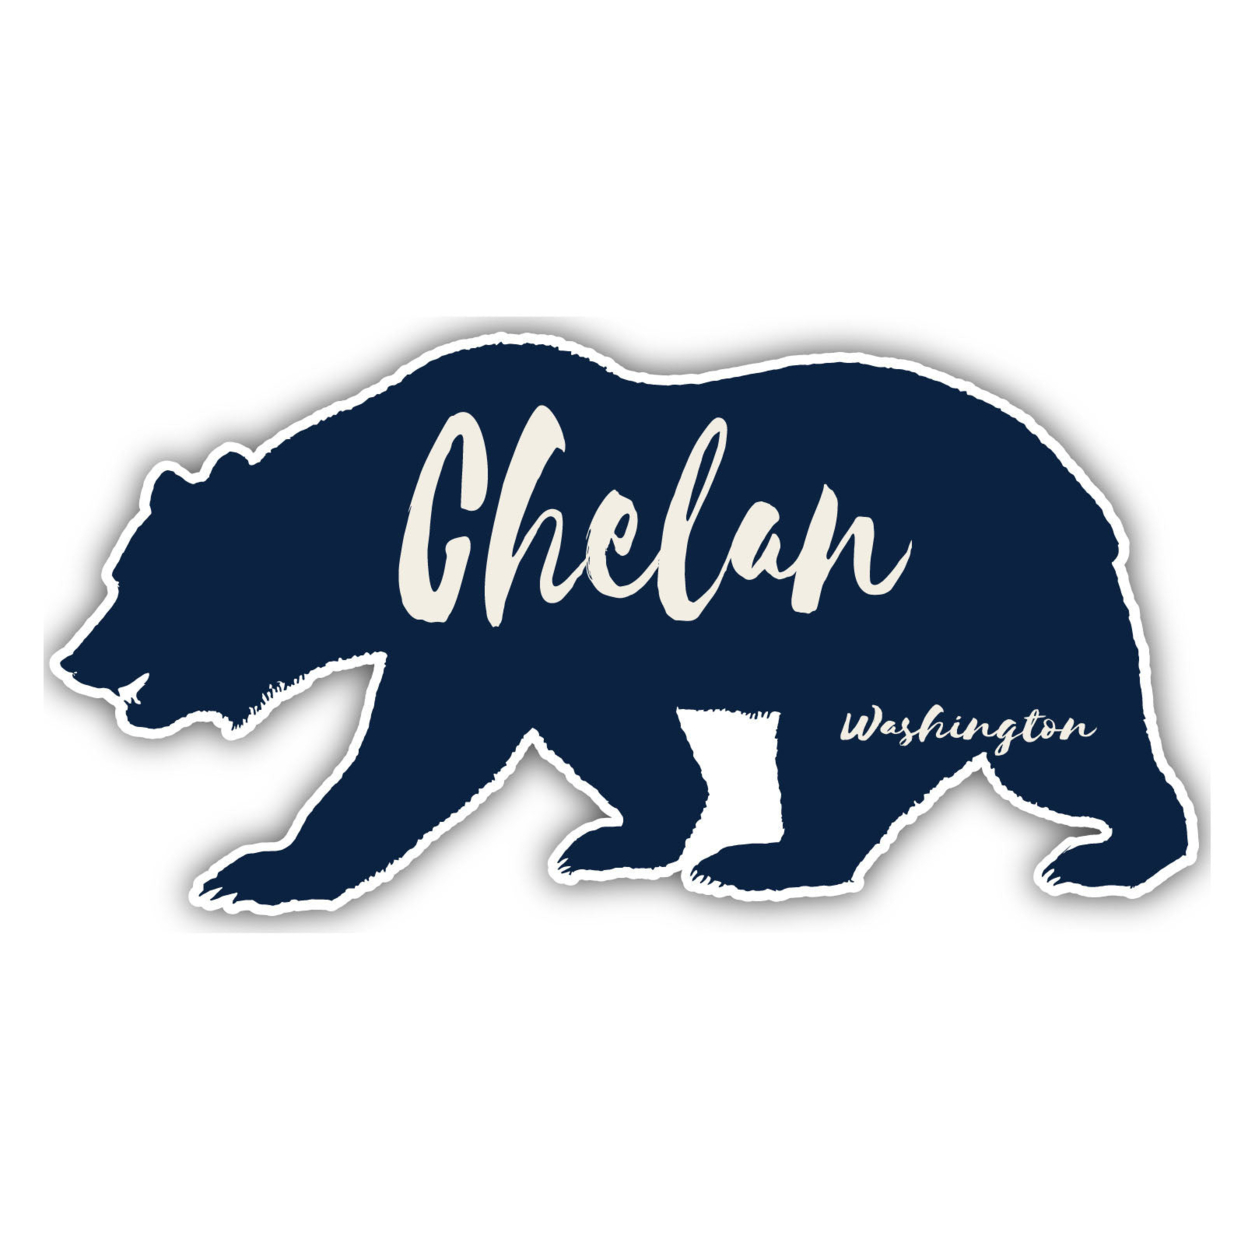 Chelan Washington Souvenir Decorative Stickers (Choose Theme And Size) - 4-Pack, 12-Inch, Camp Life